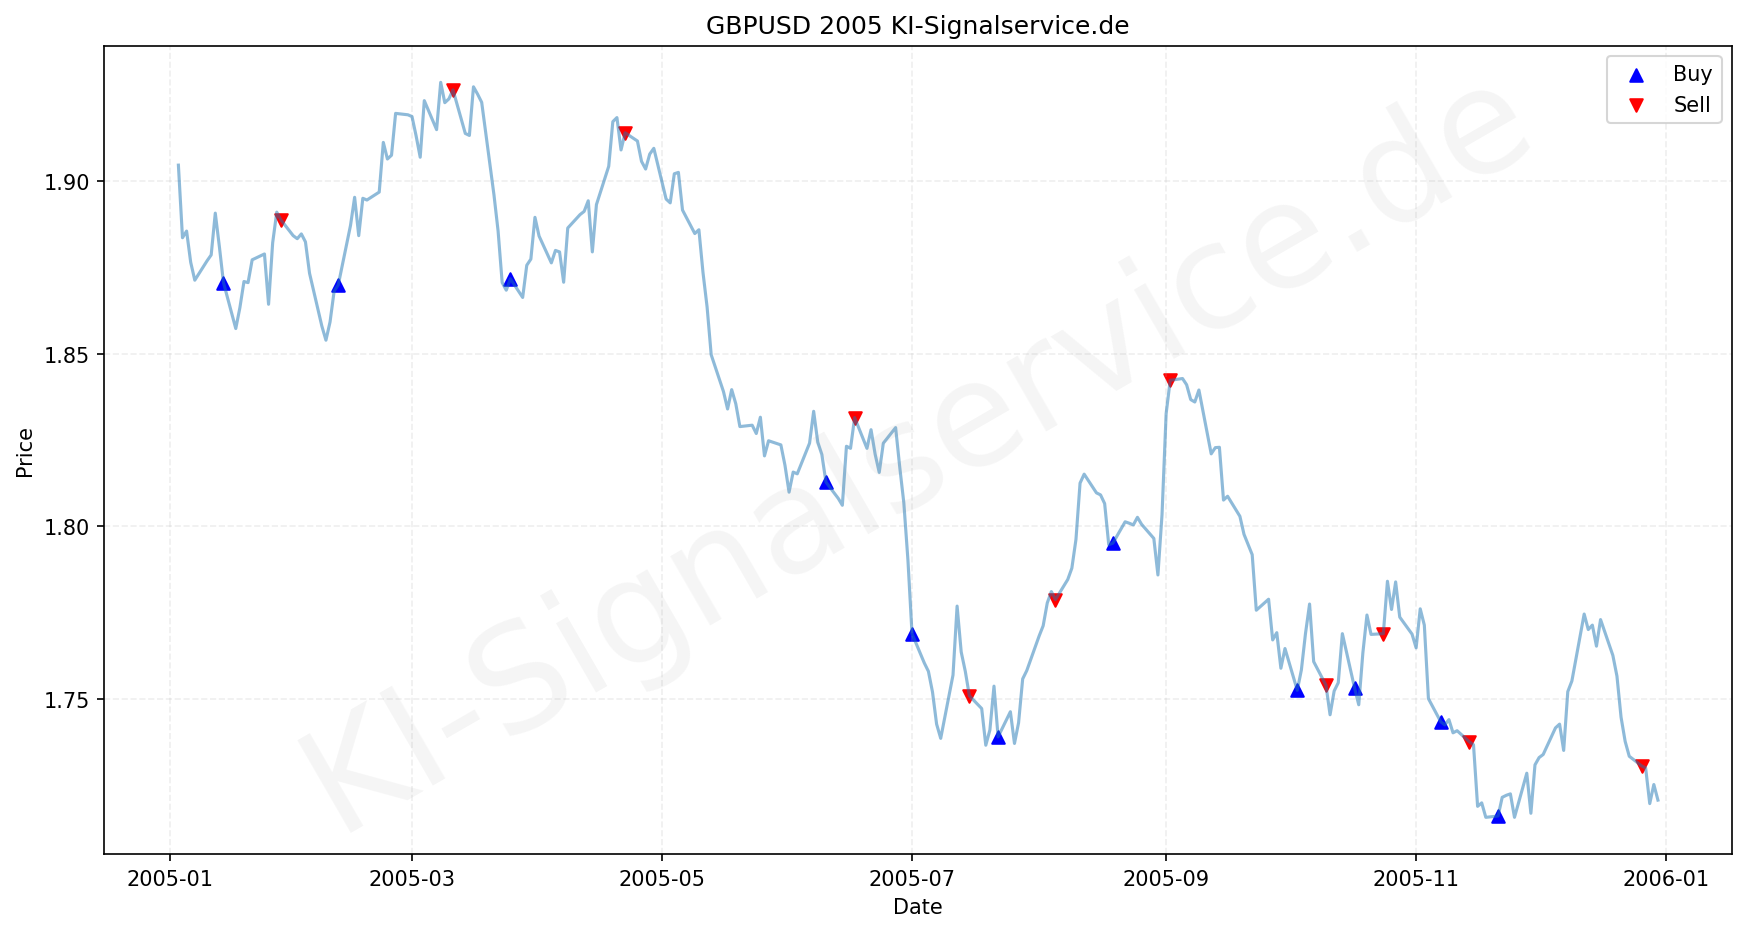 GBPUSD Chart - KI Tradingsignale 2005